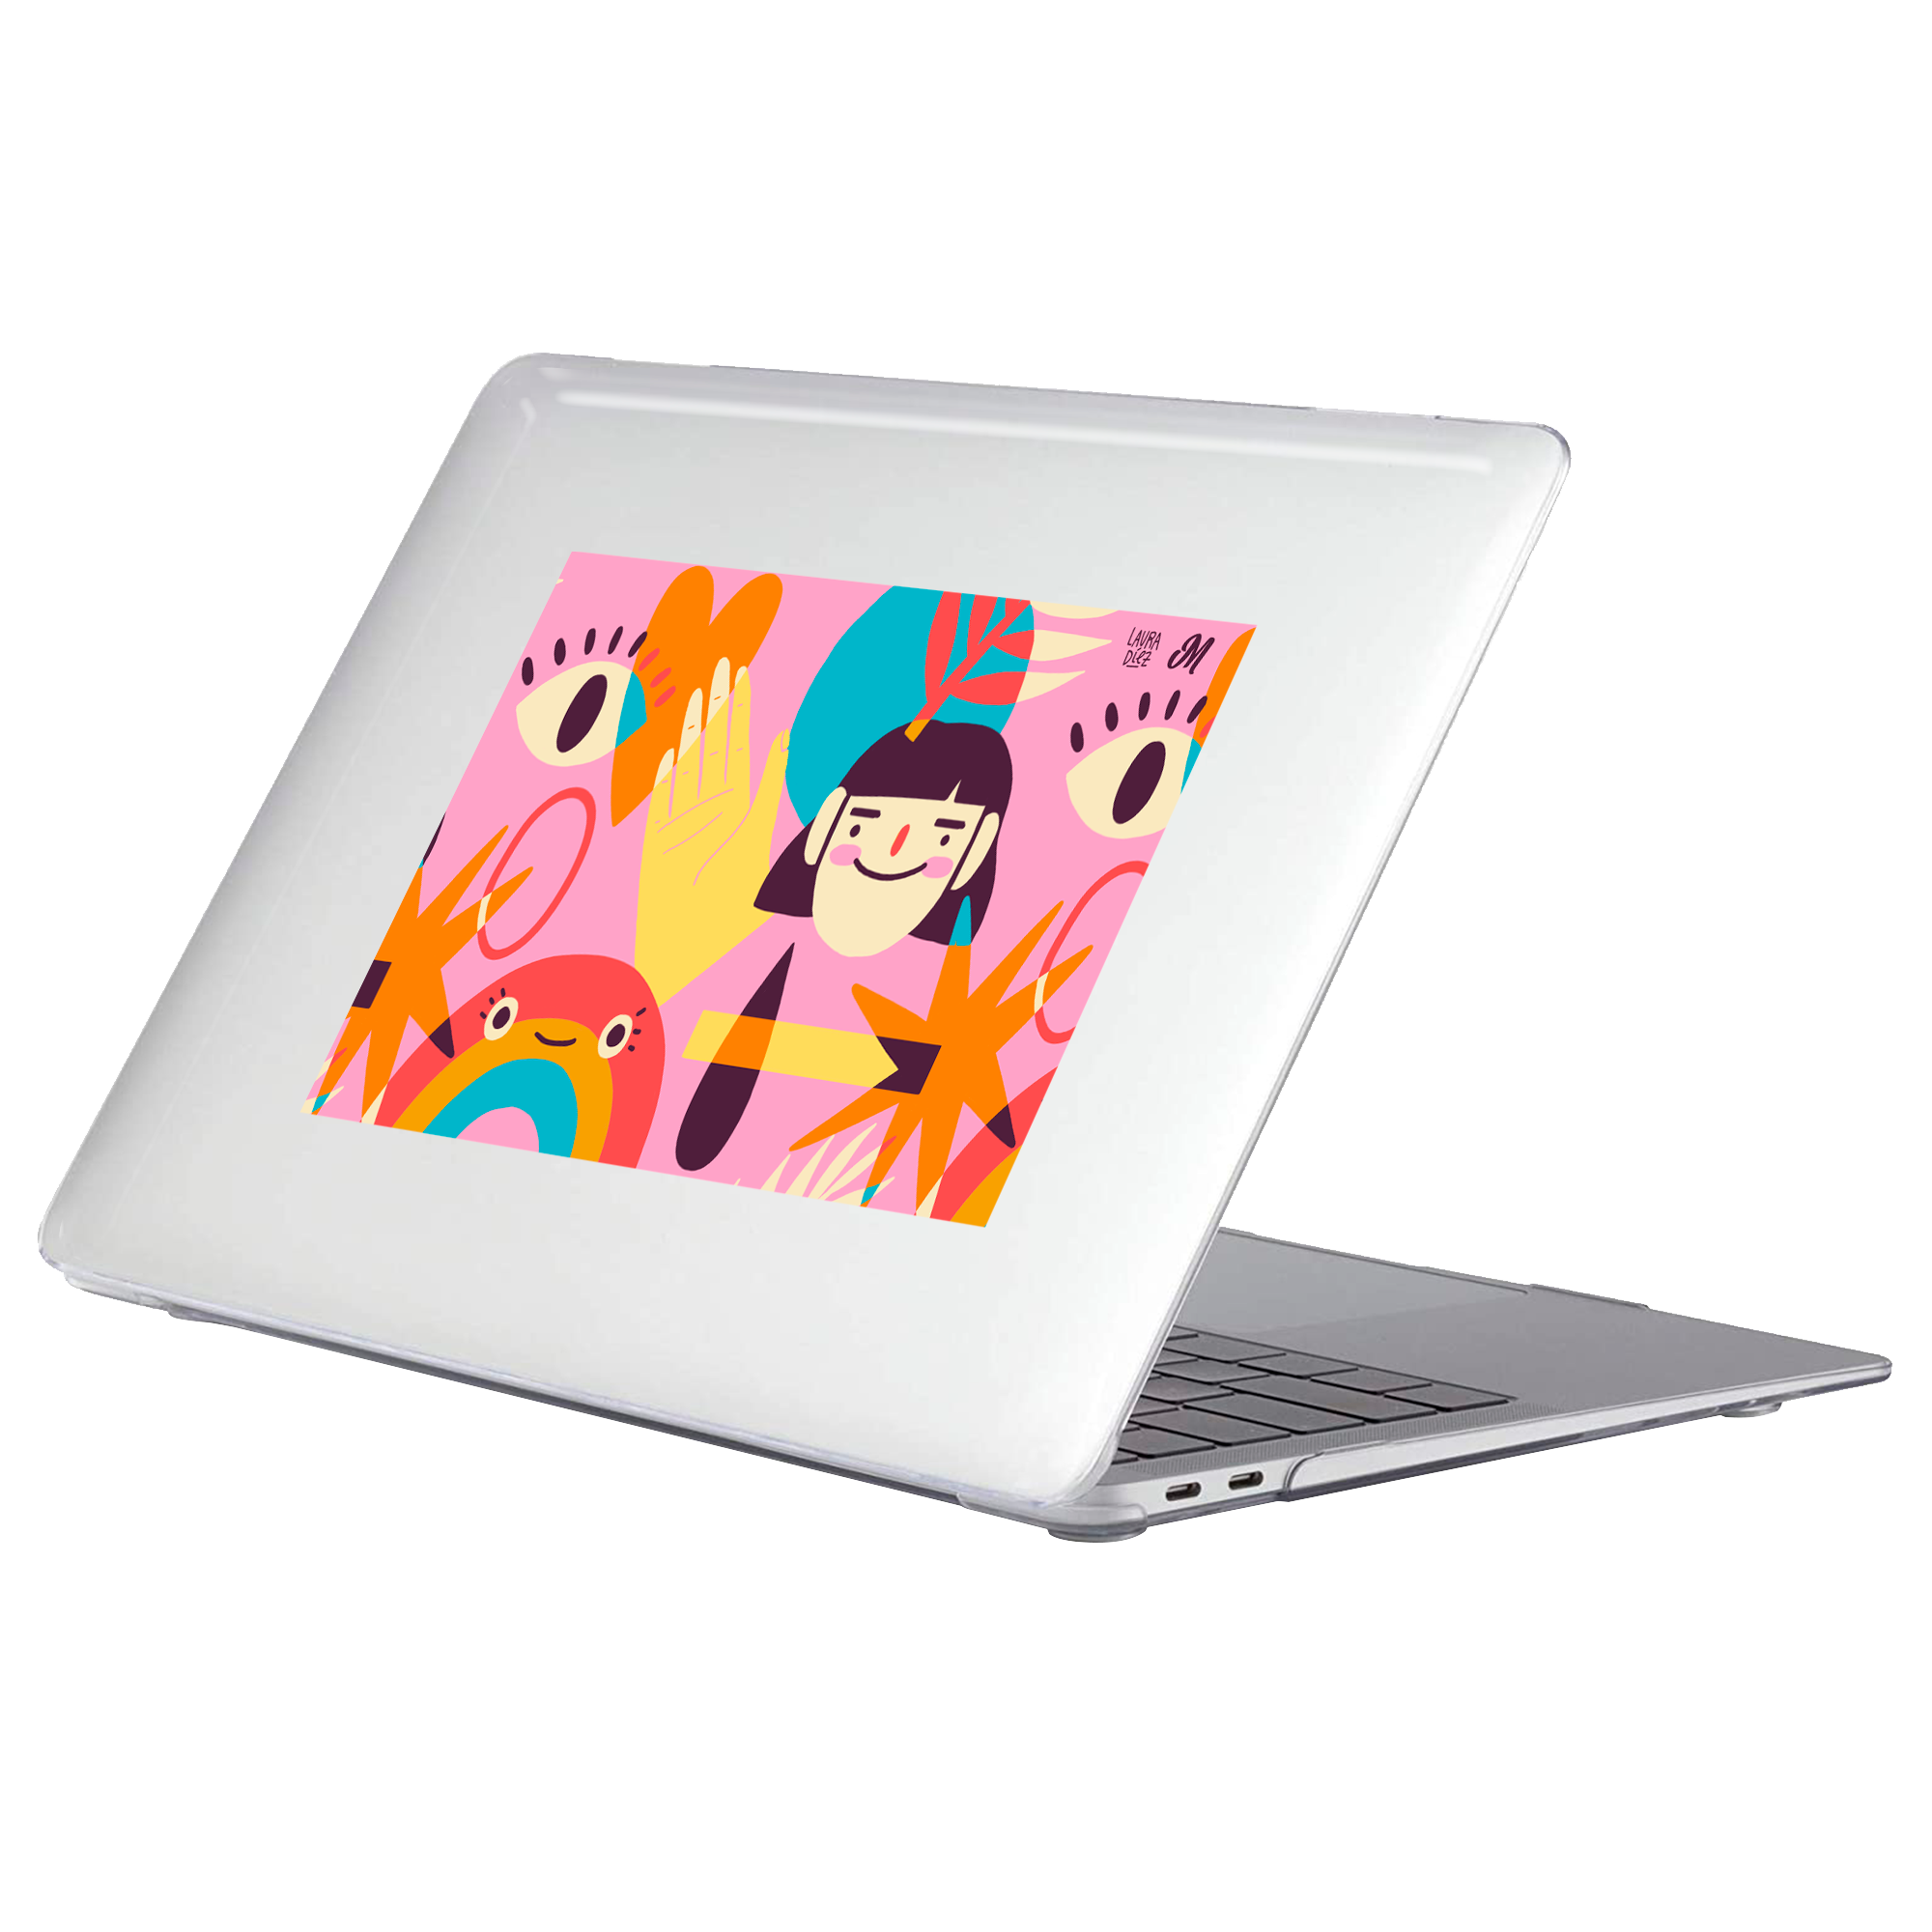 Sueños Arcoiris MacBook Case - Mandala Cases